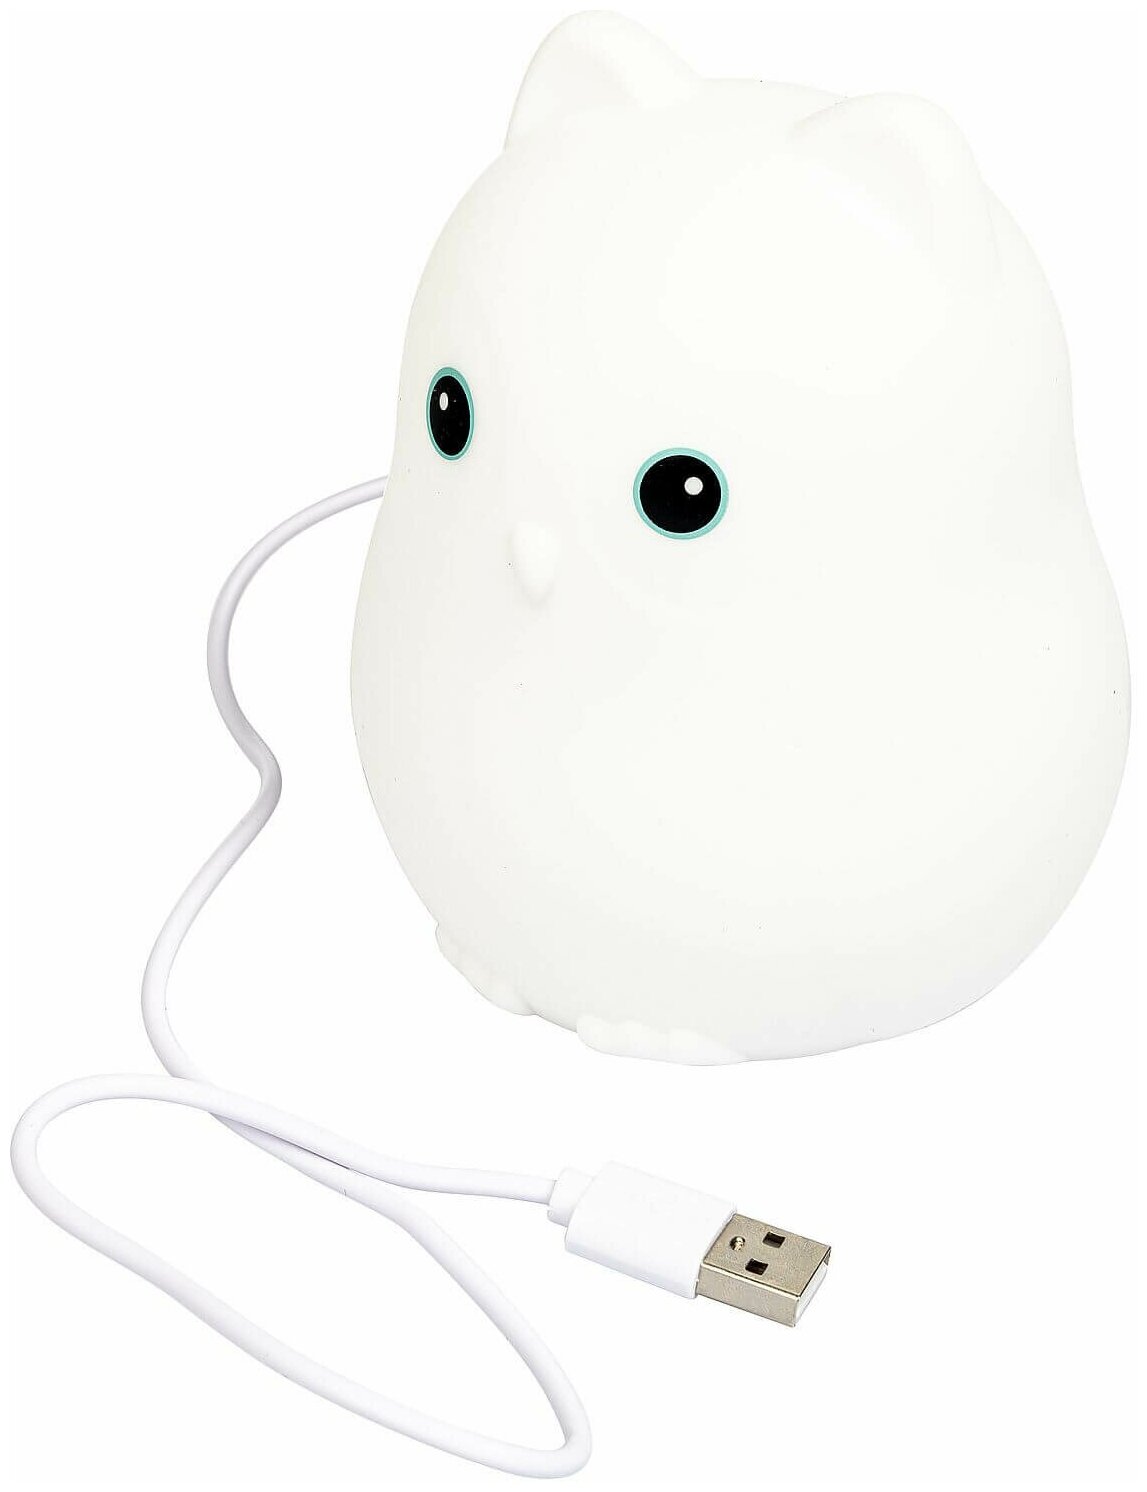 Ночная лампа сова, BONDIBON, силикон, 8 цветов, USB зарядка - фотография № 4